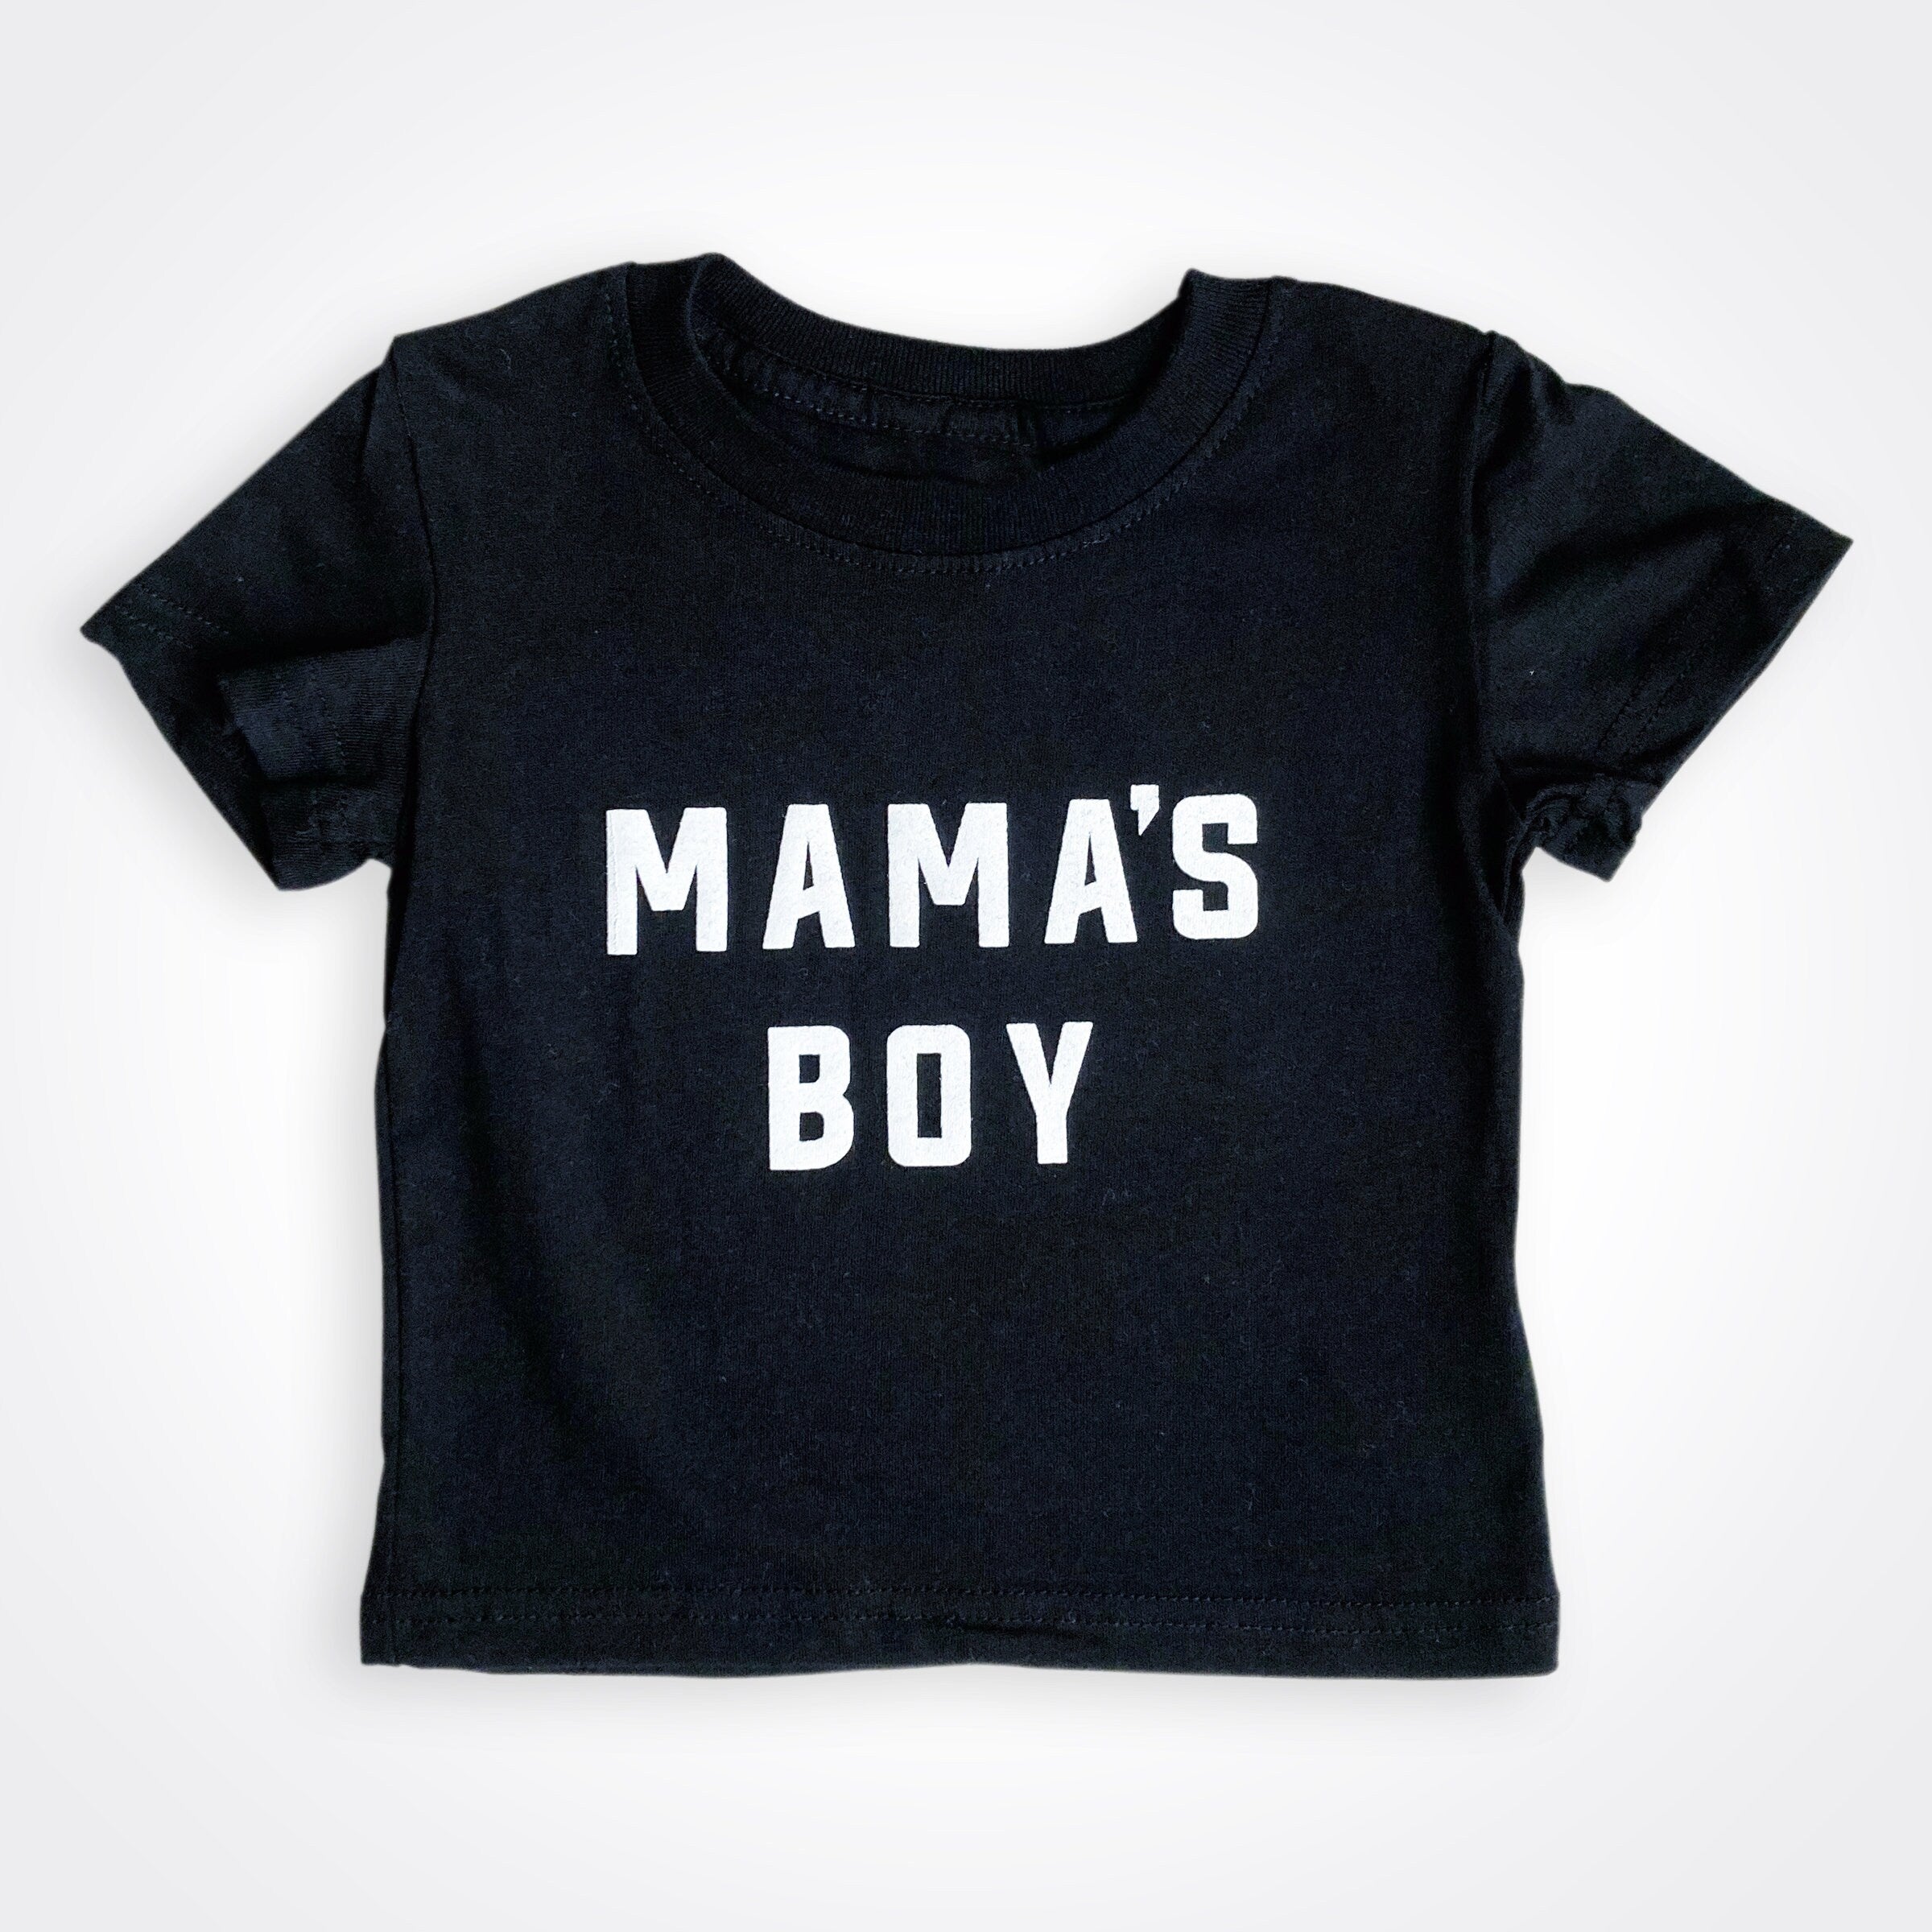 Mama's Boy Black Shirt